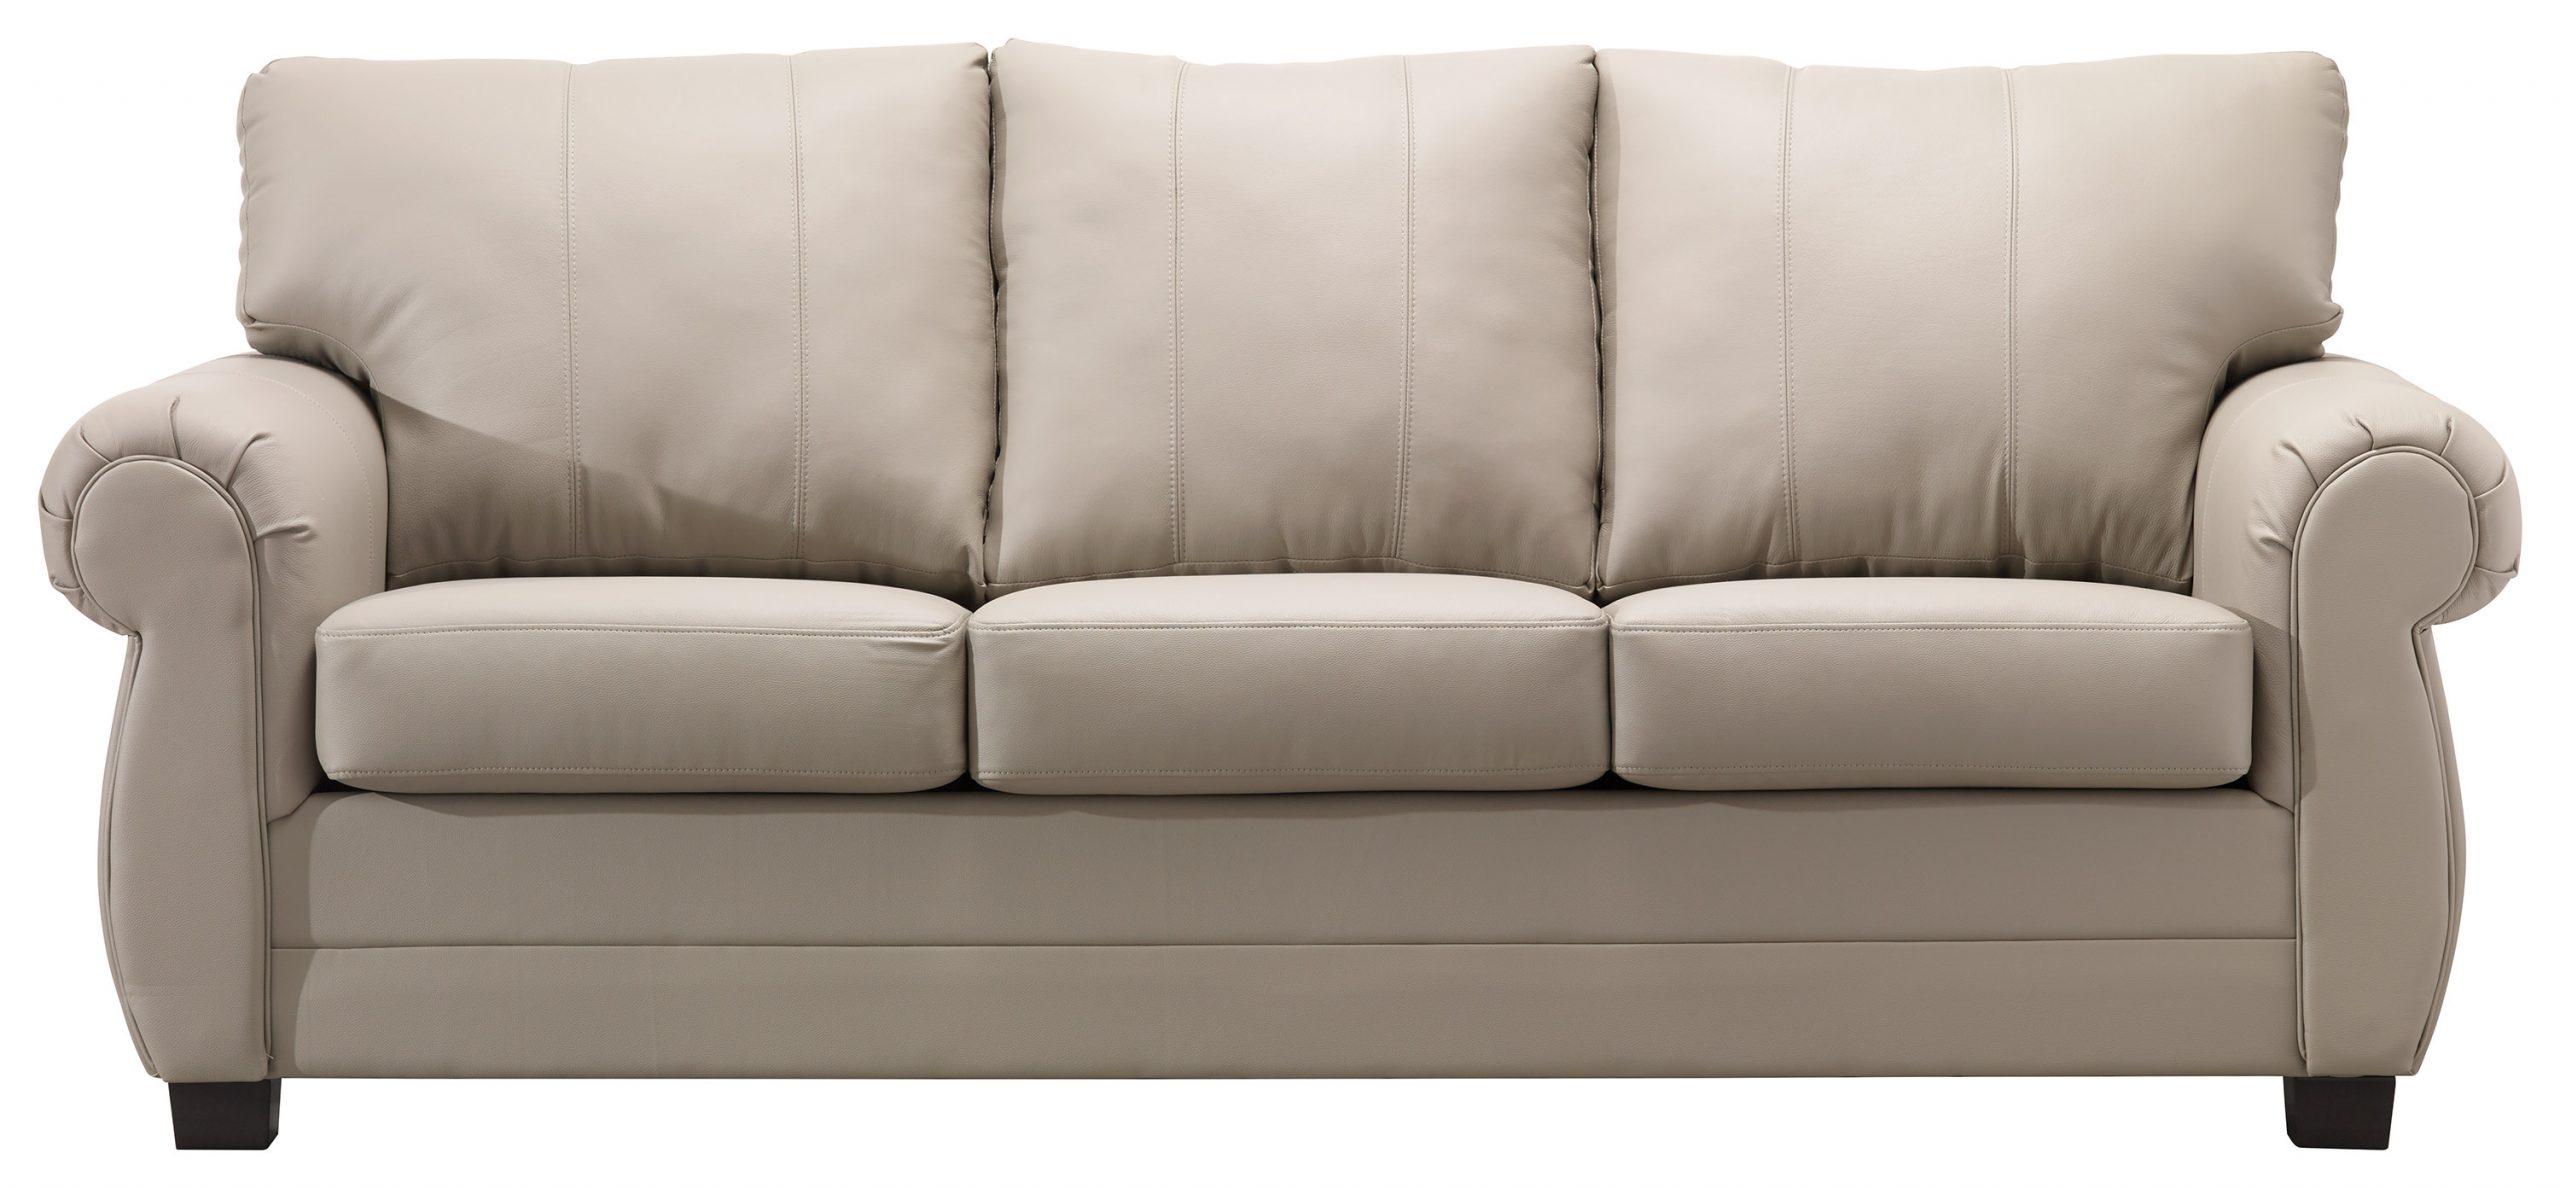 inexpensive grey leather sofa